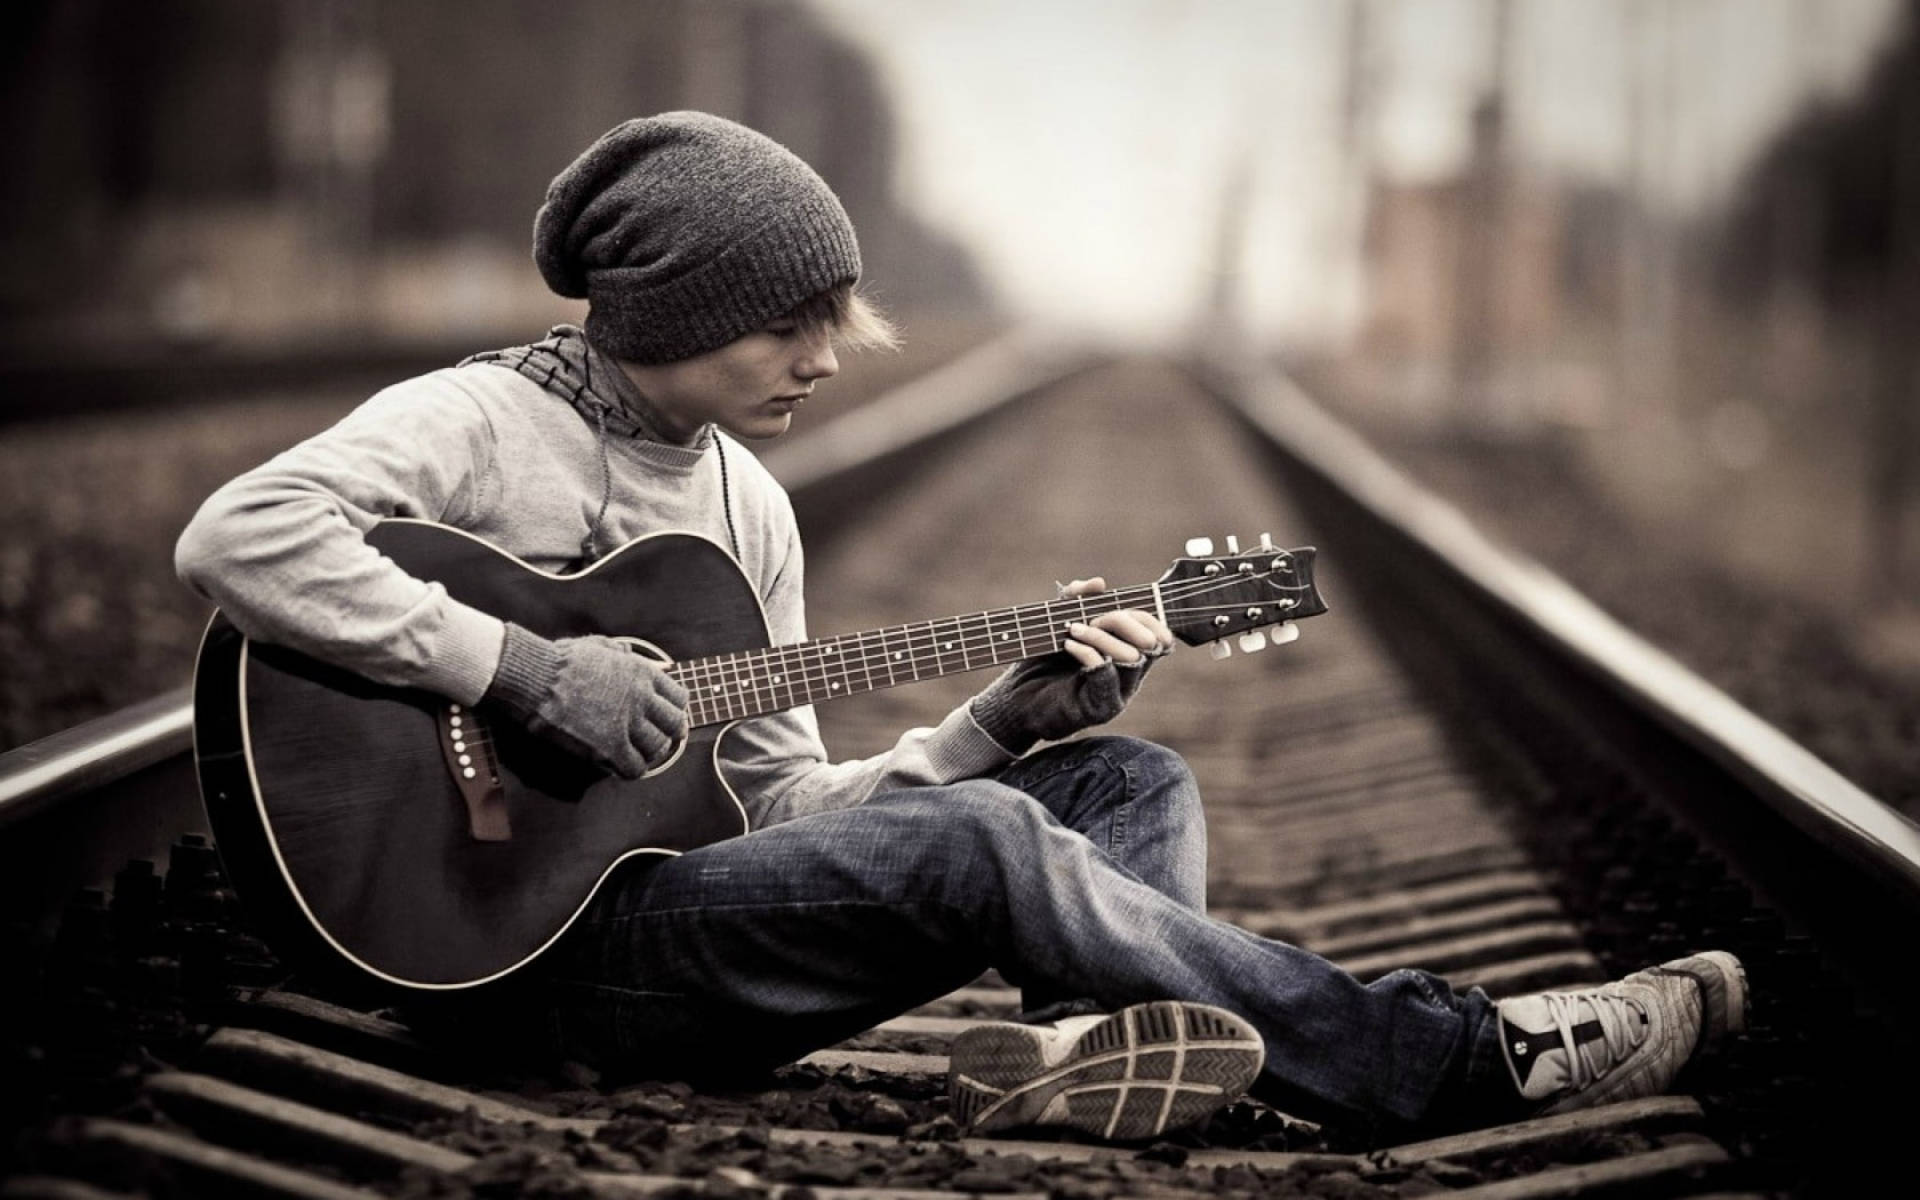 Teenage Boy Standing Alone On A Railway Track